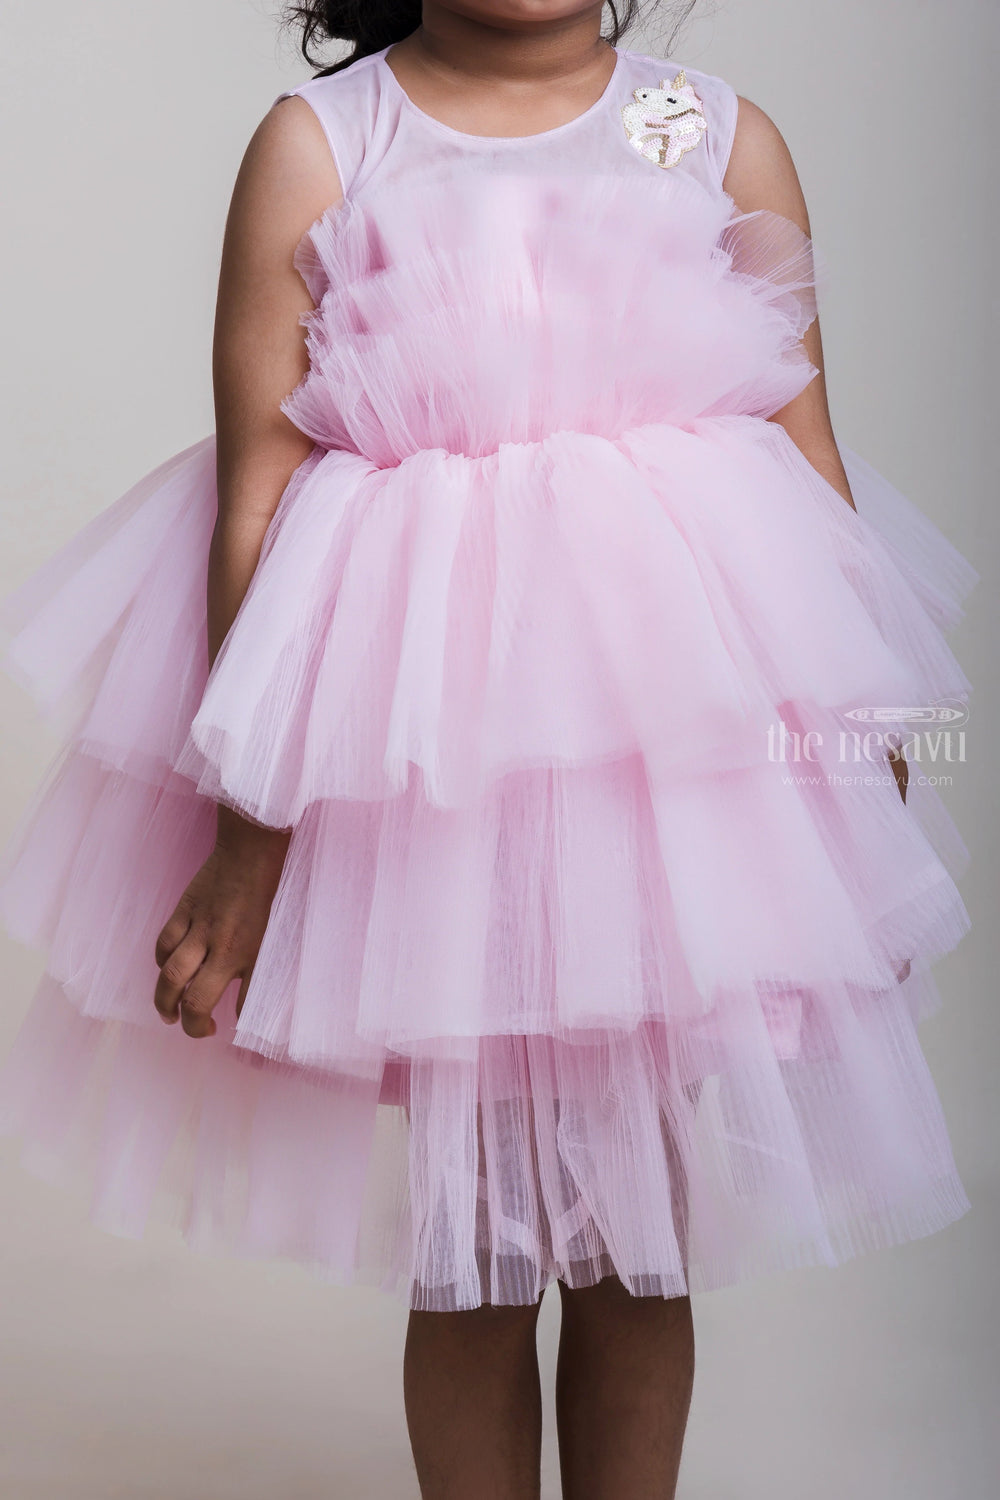 The Nesavu Girls Tutu Frock Netted And Layered Pink Frocks For Little Girls Nesavu Fresh Pink Net Frocks Collection For Girls| New Arrival| The Nesavu